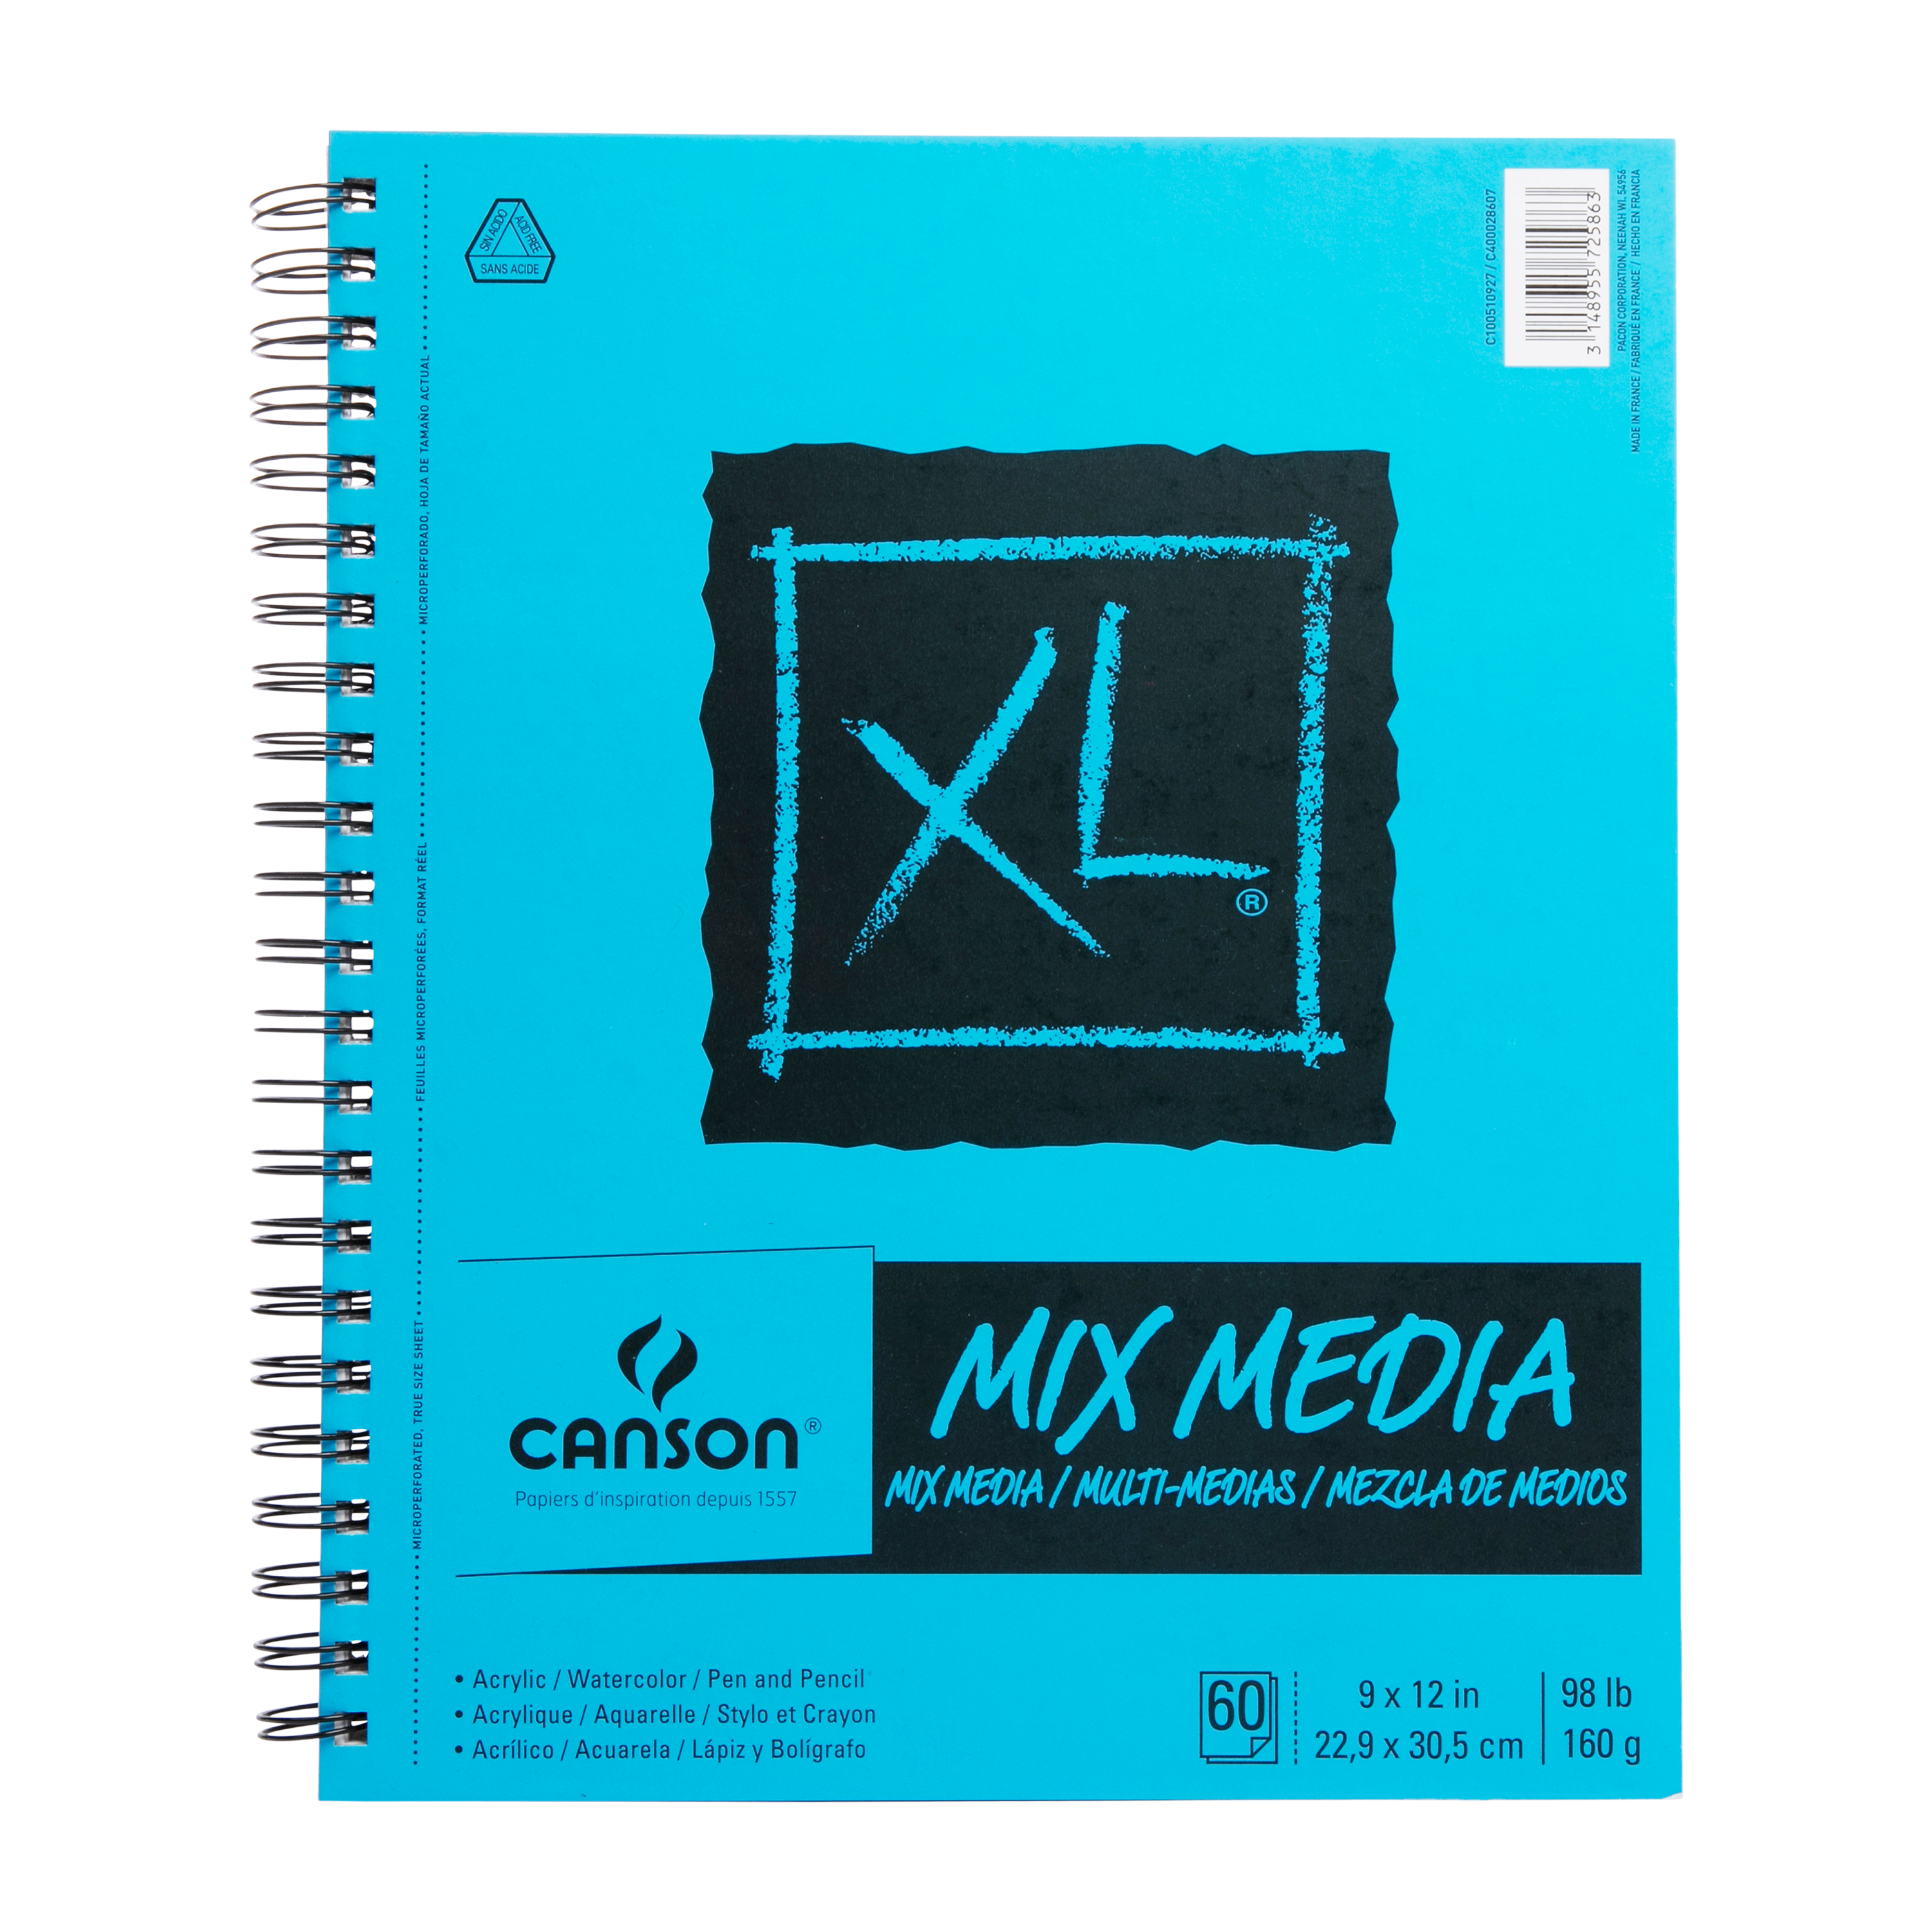  Canson XL Mixed Media Paper Pad, 98 lb, 9 x 12 Inches